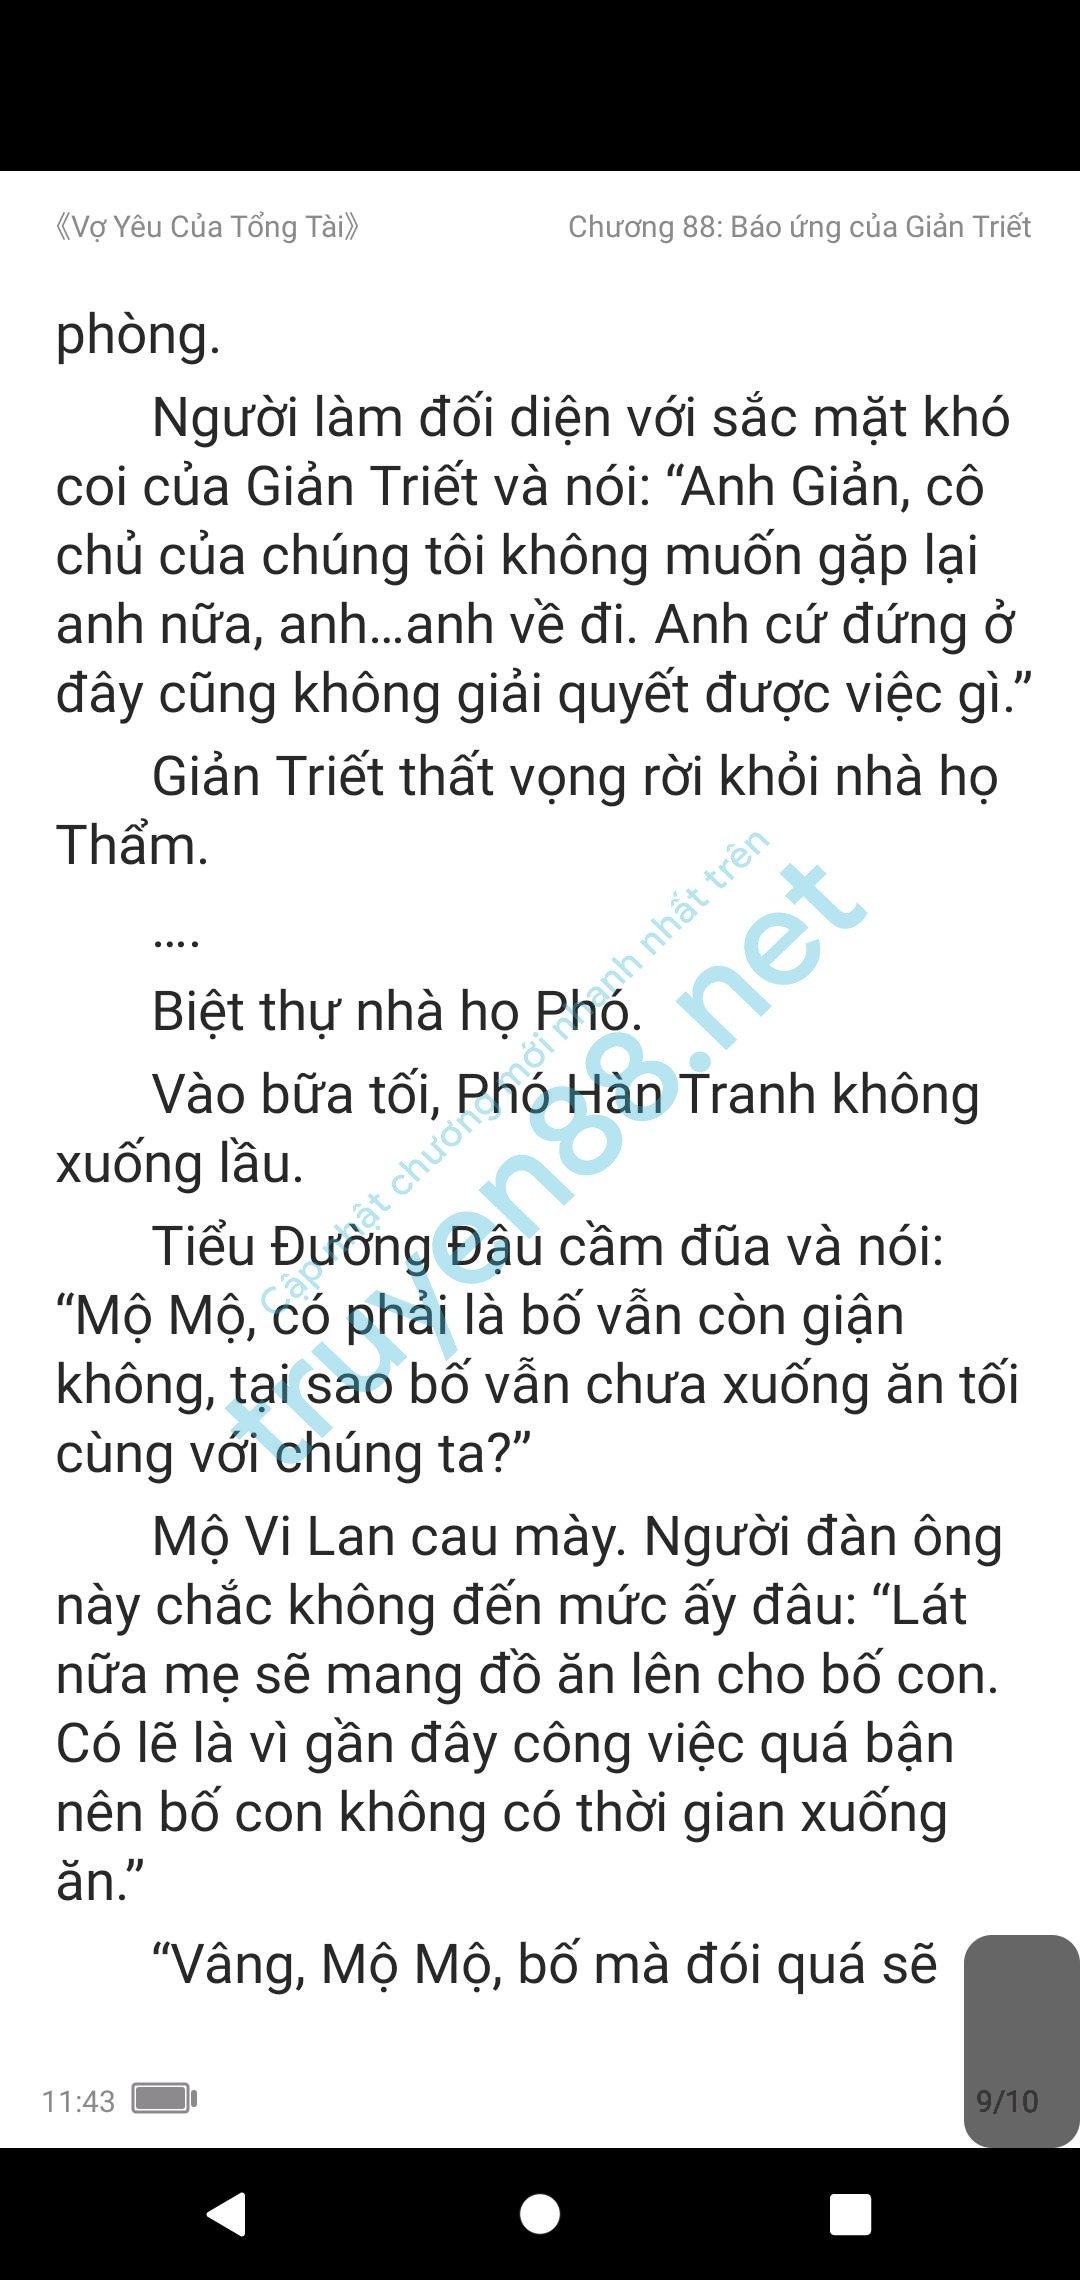 vo-yeu-cua-tong-tai-mo-vi-lan--pho-han-tranh-88-1